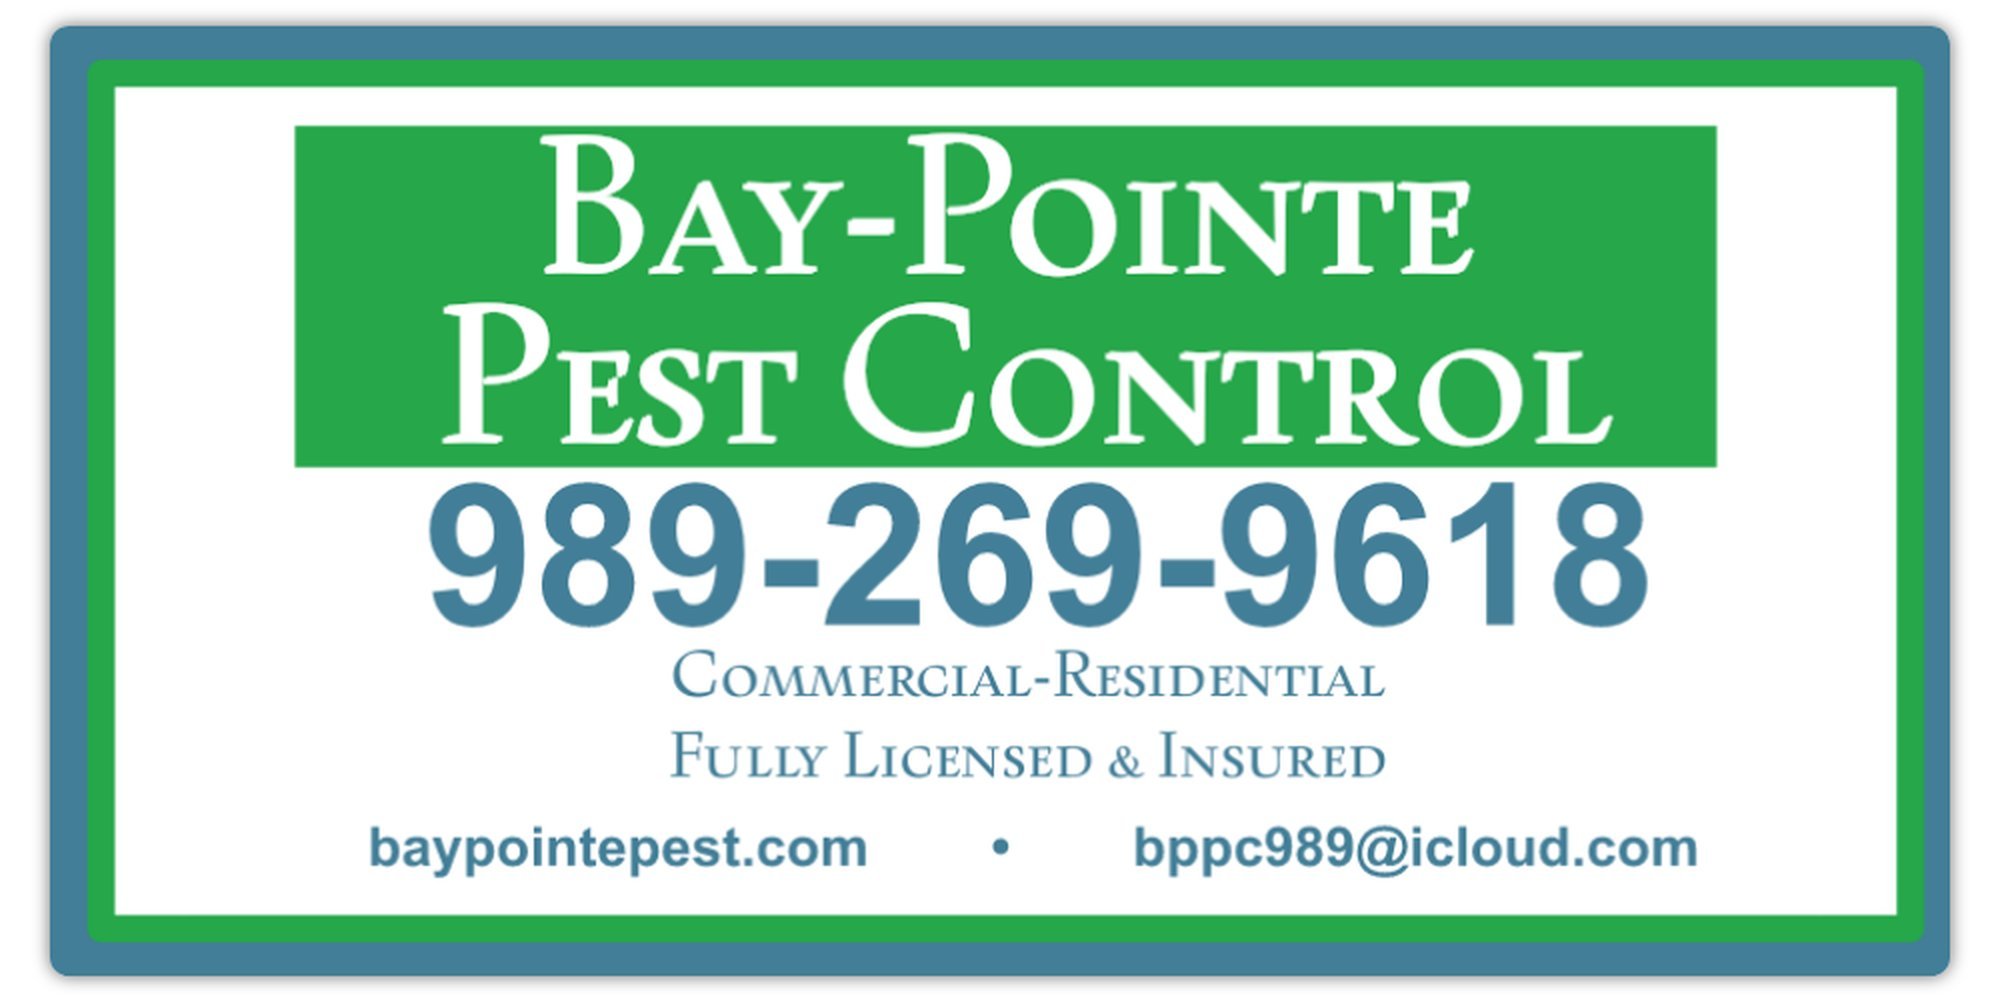 Bay-Pointe Pest Control.jpg